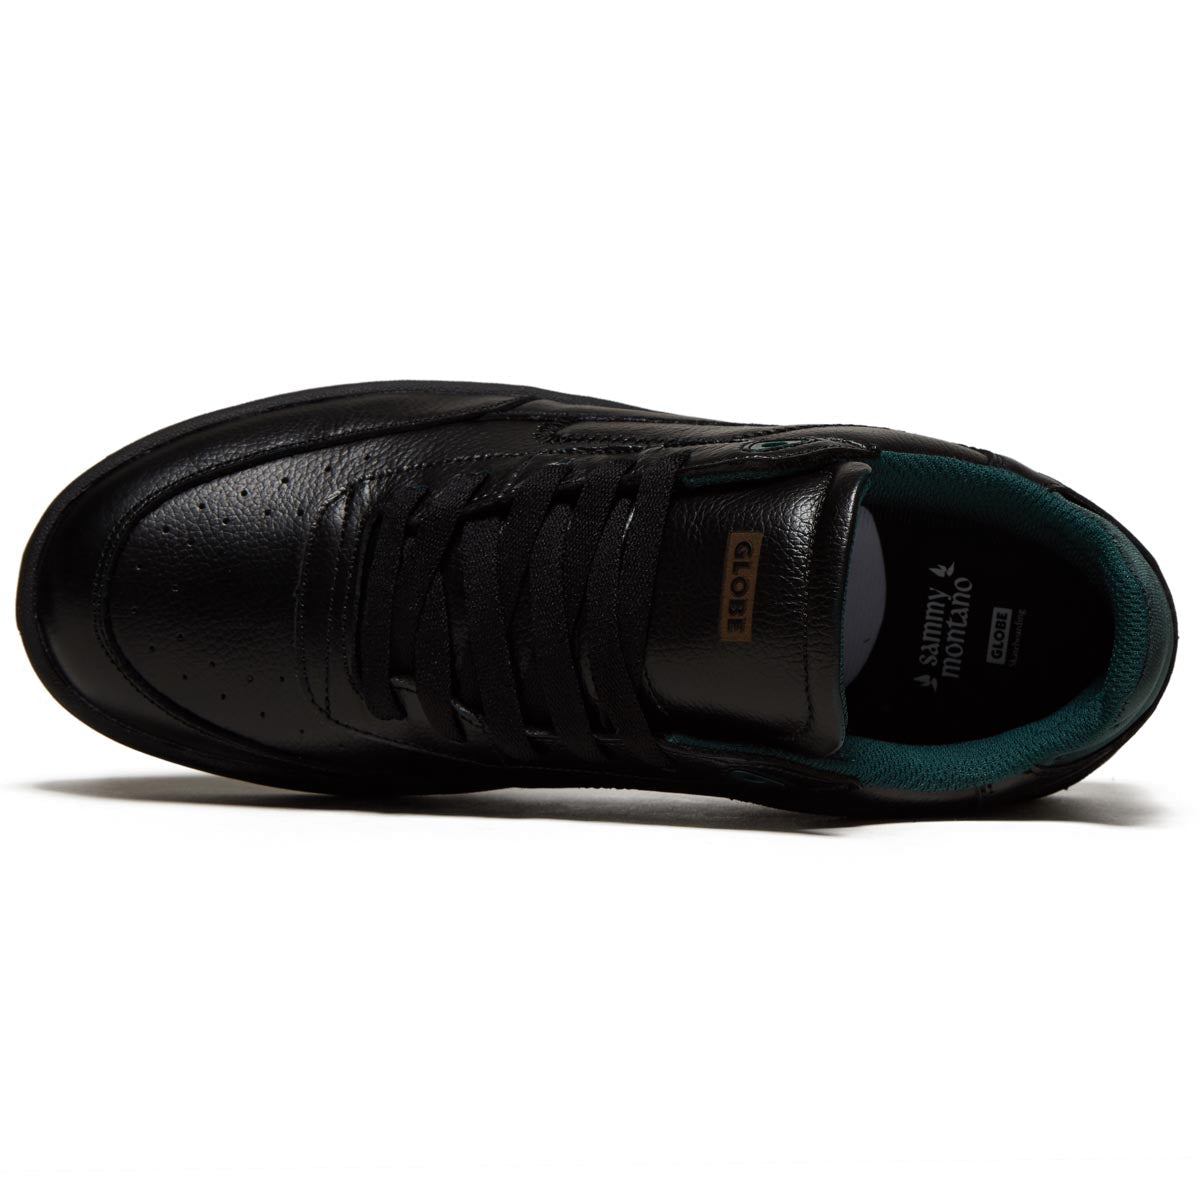 Globe Holand Shoes - Black/Green/Montano image 3